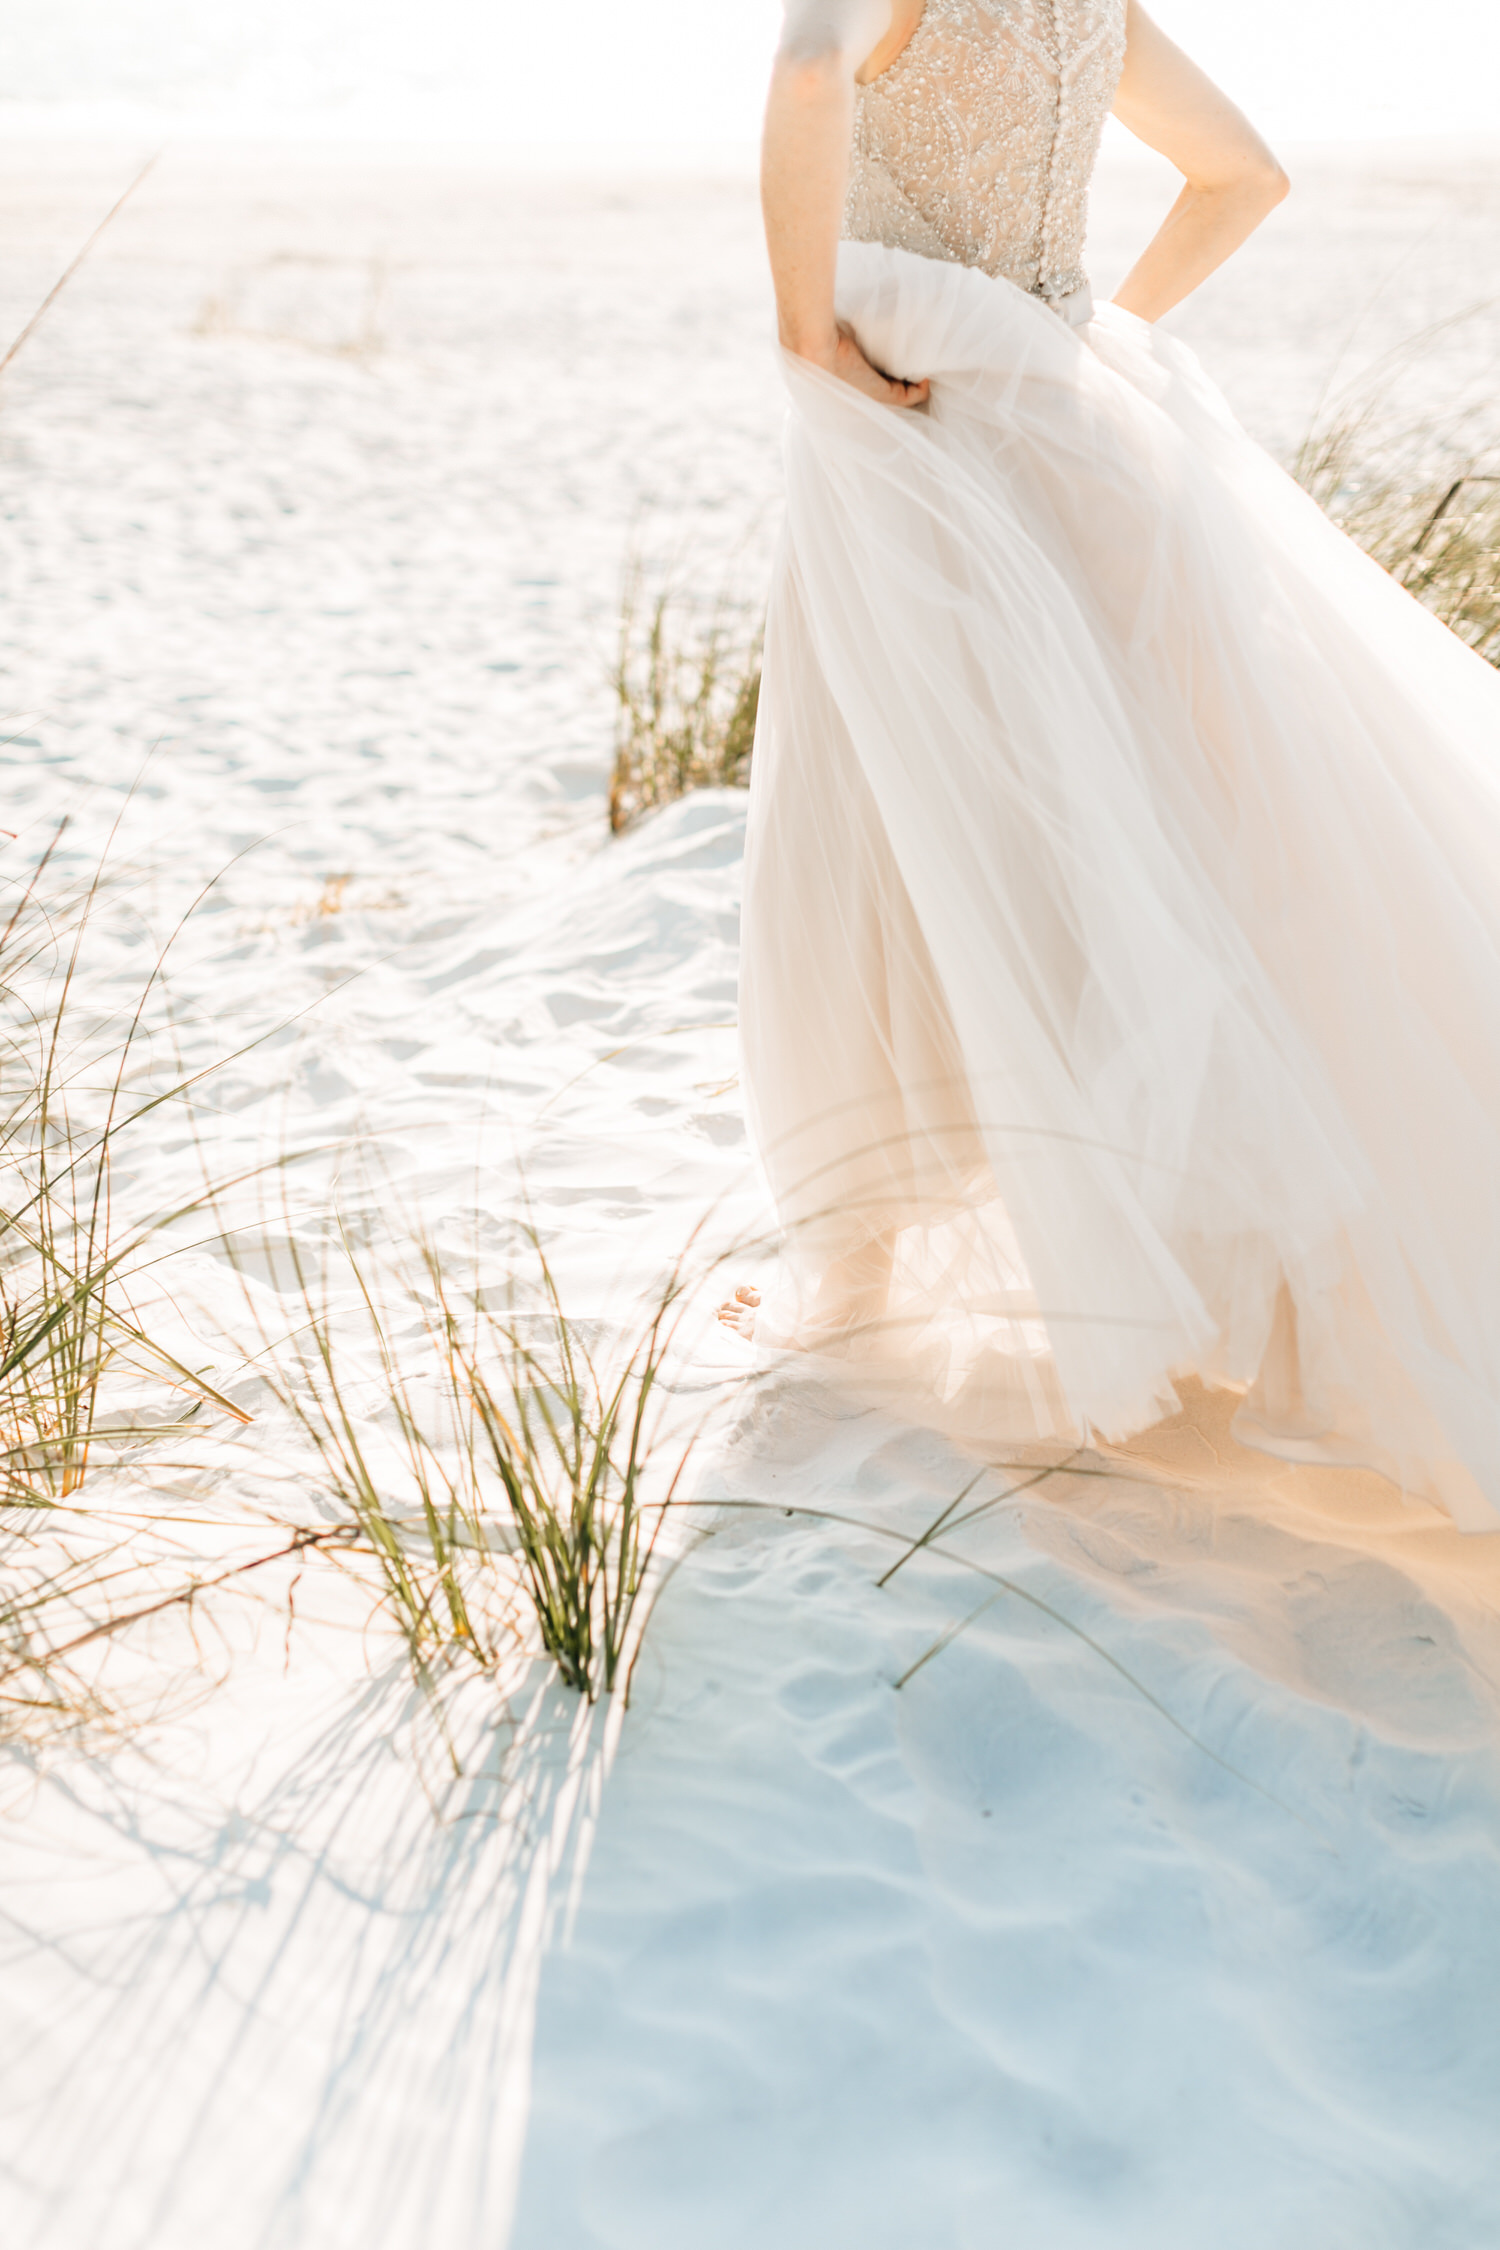 Sandbar Anna Maria Island Wedding Photography